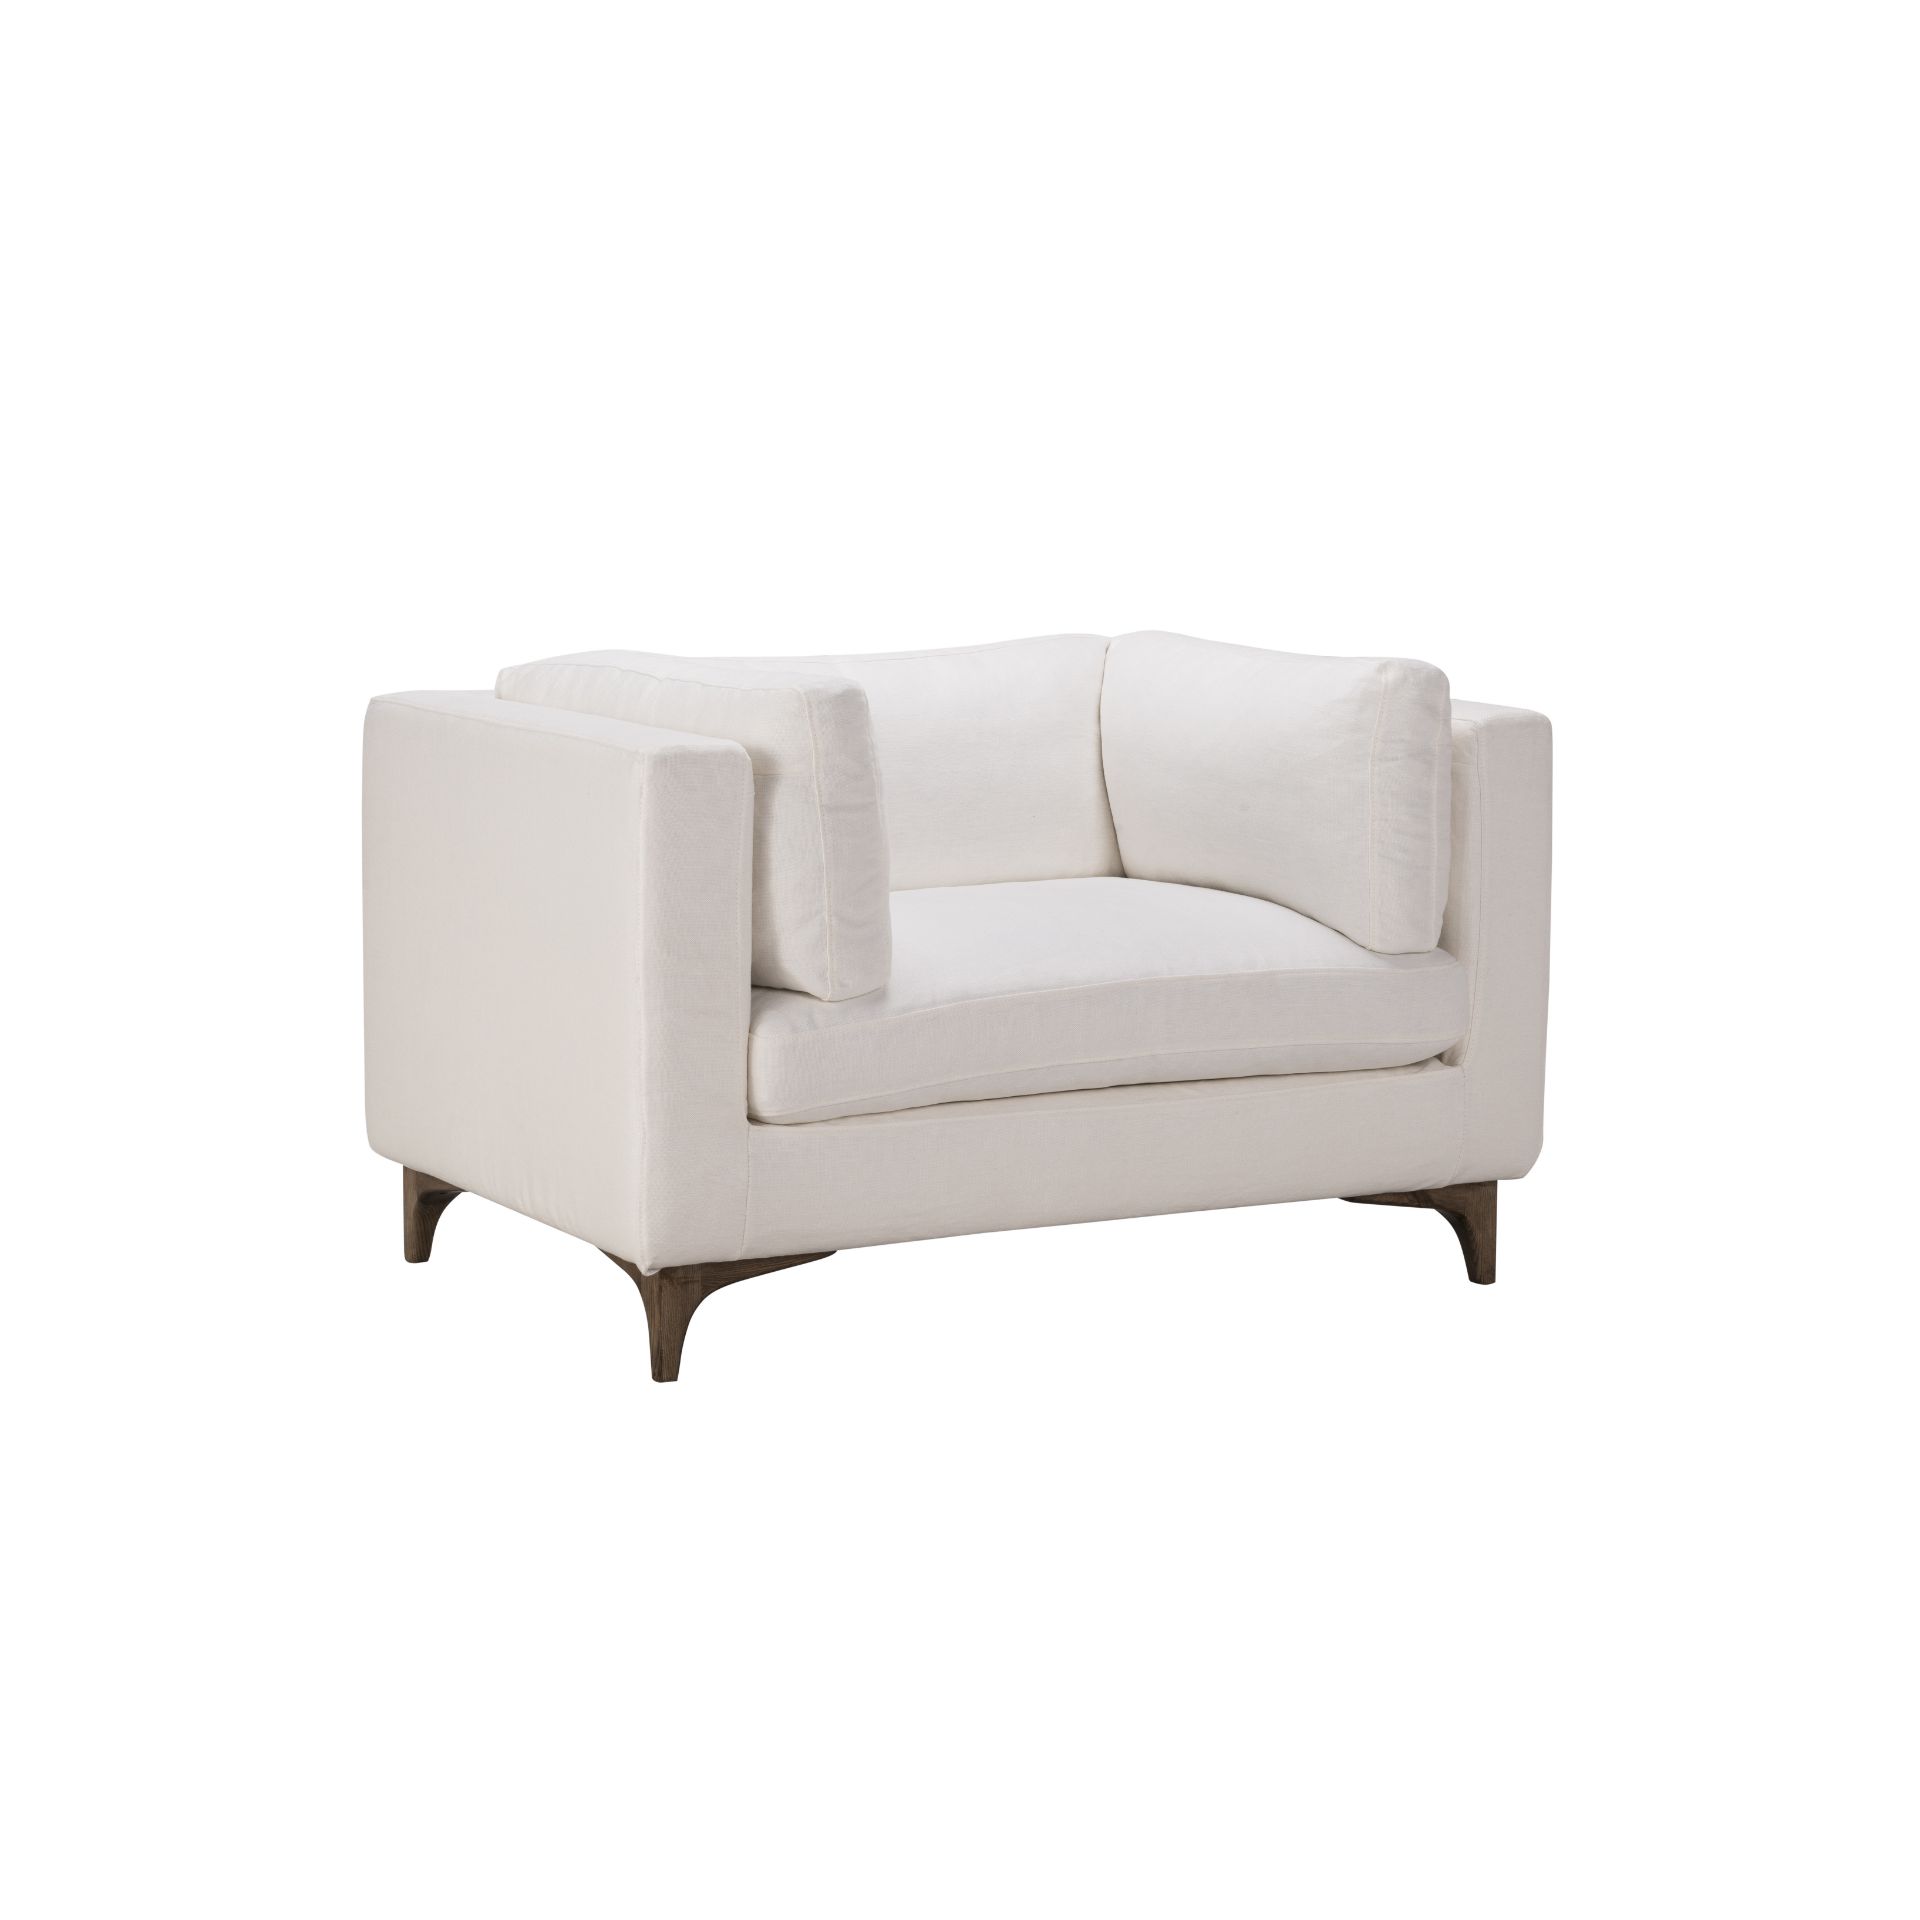 Dwell Sofa 1 Seater Galata Linen White & Weathered Oak 120x85x72cm RRP £ 2700